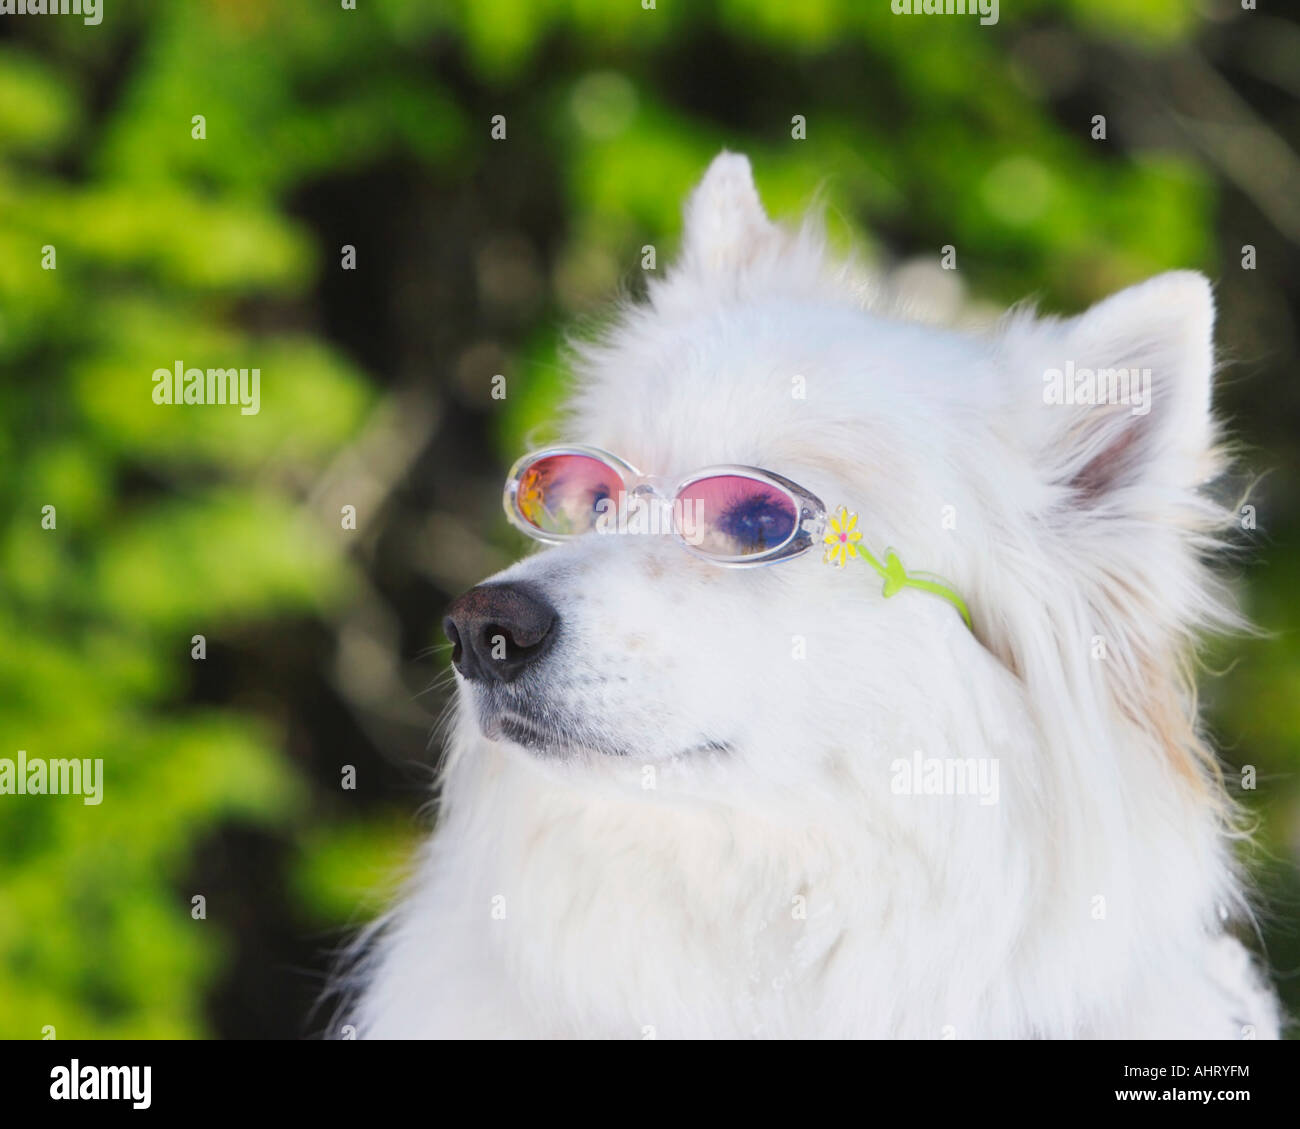 White dog wearing goggles Stock Photo